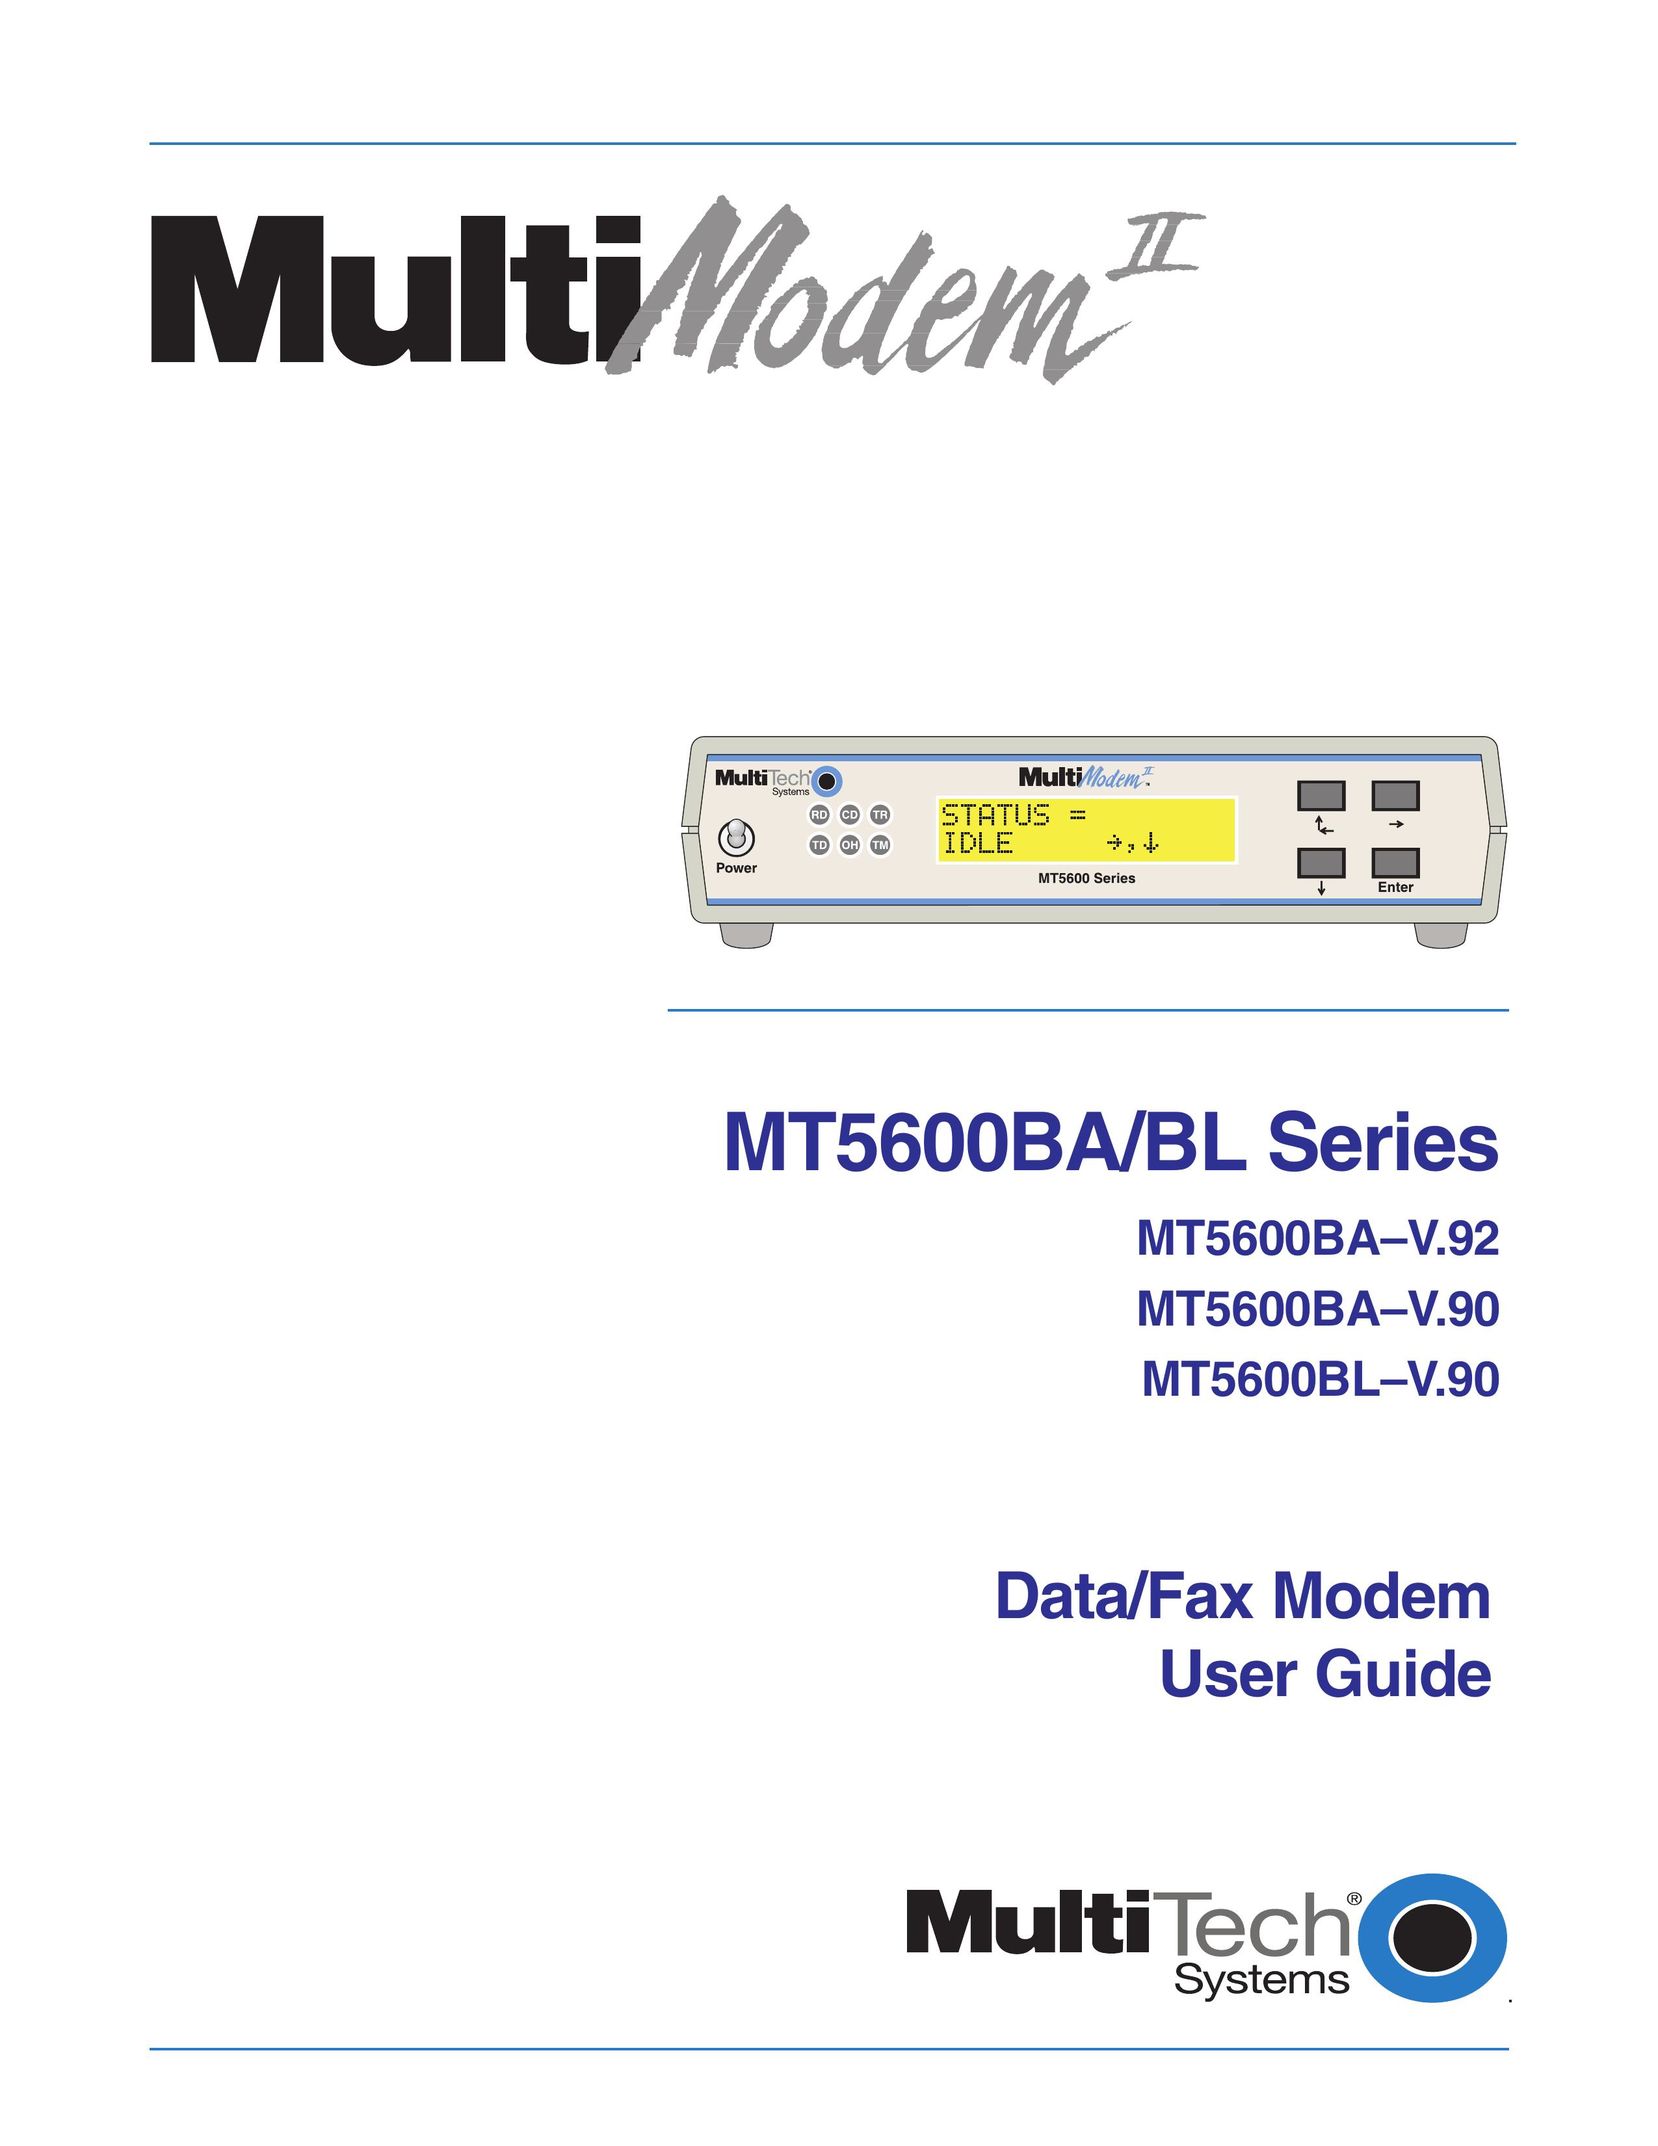 Multitech MT5600BLV.90 Modem User Manual